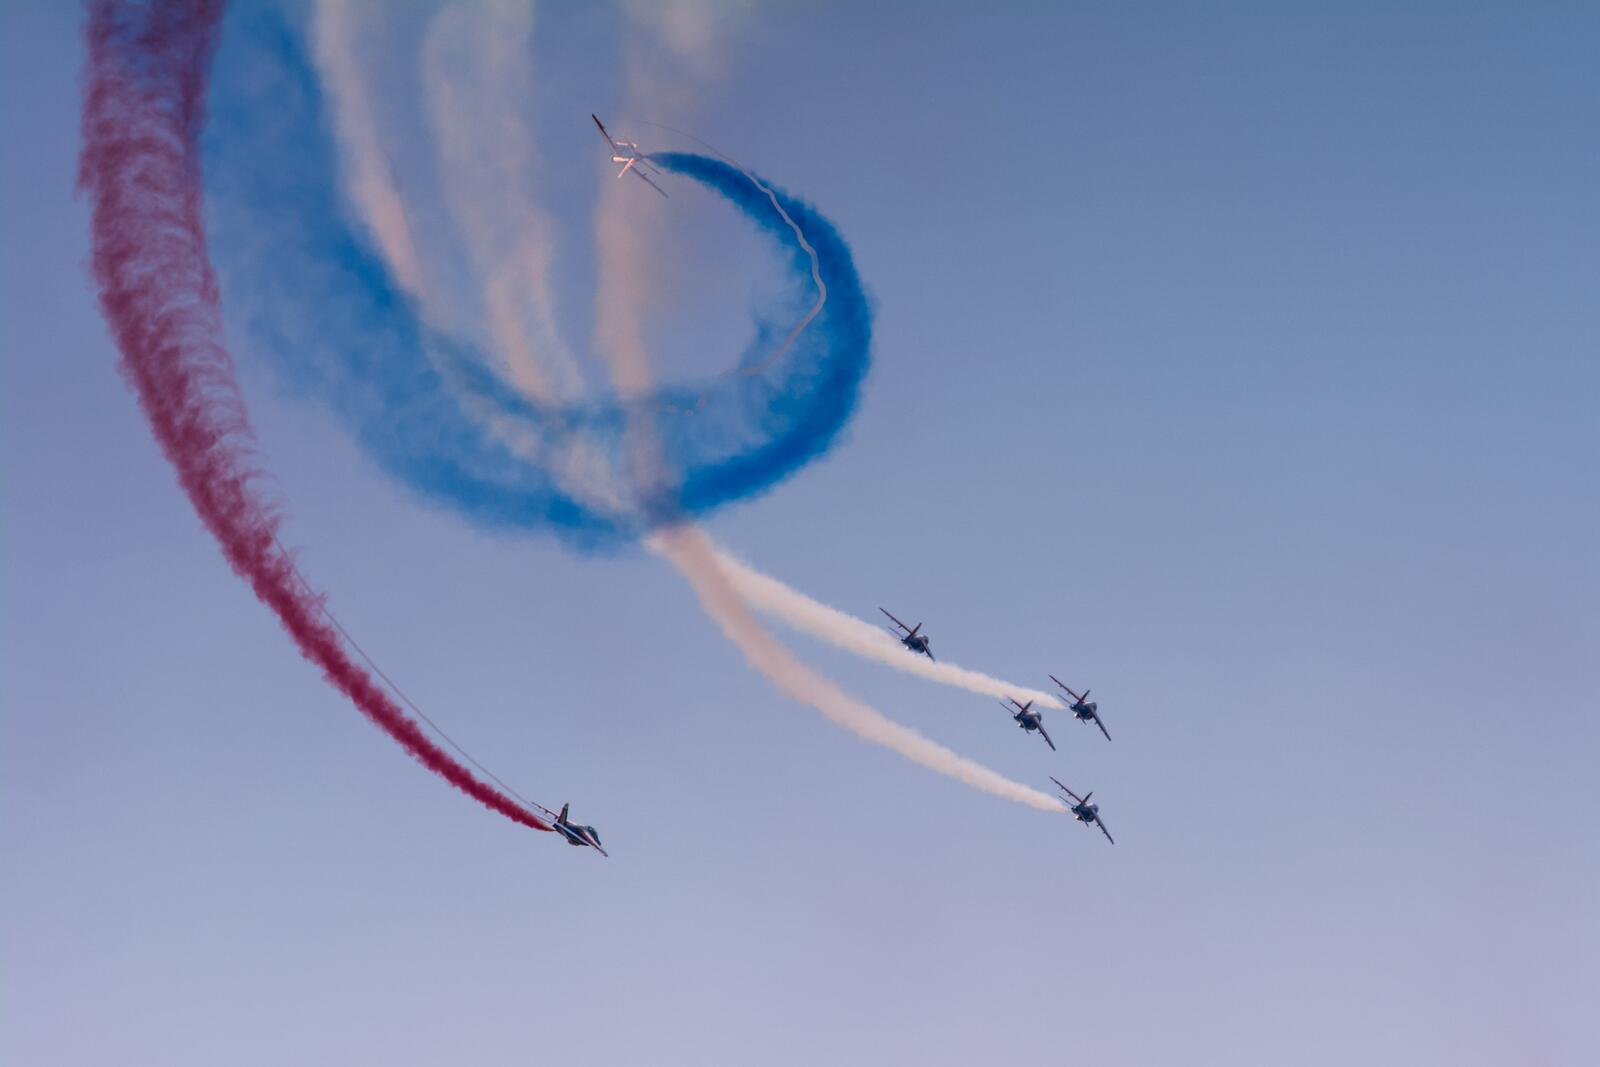 Wallpapers aircraft air show Patrouille de France on the desktop